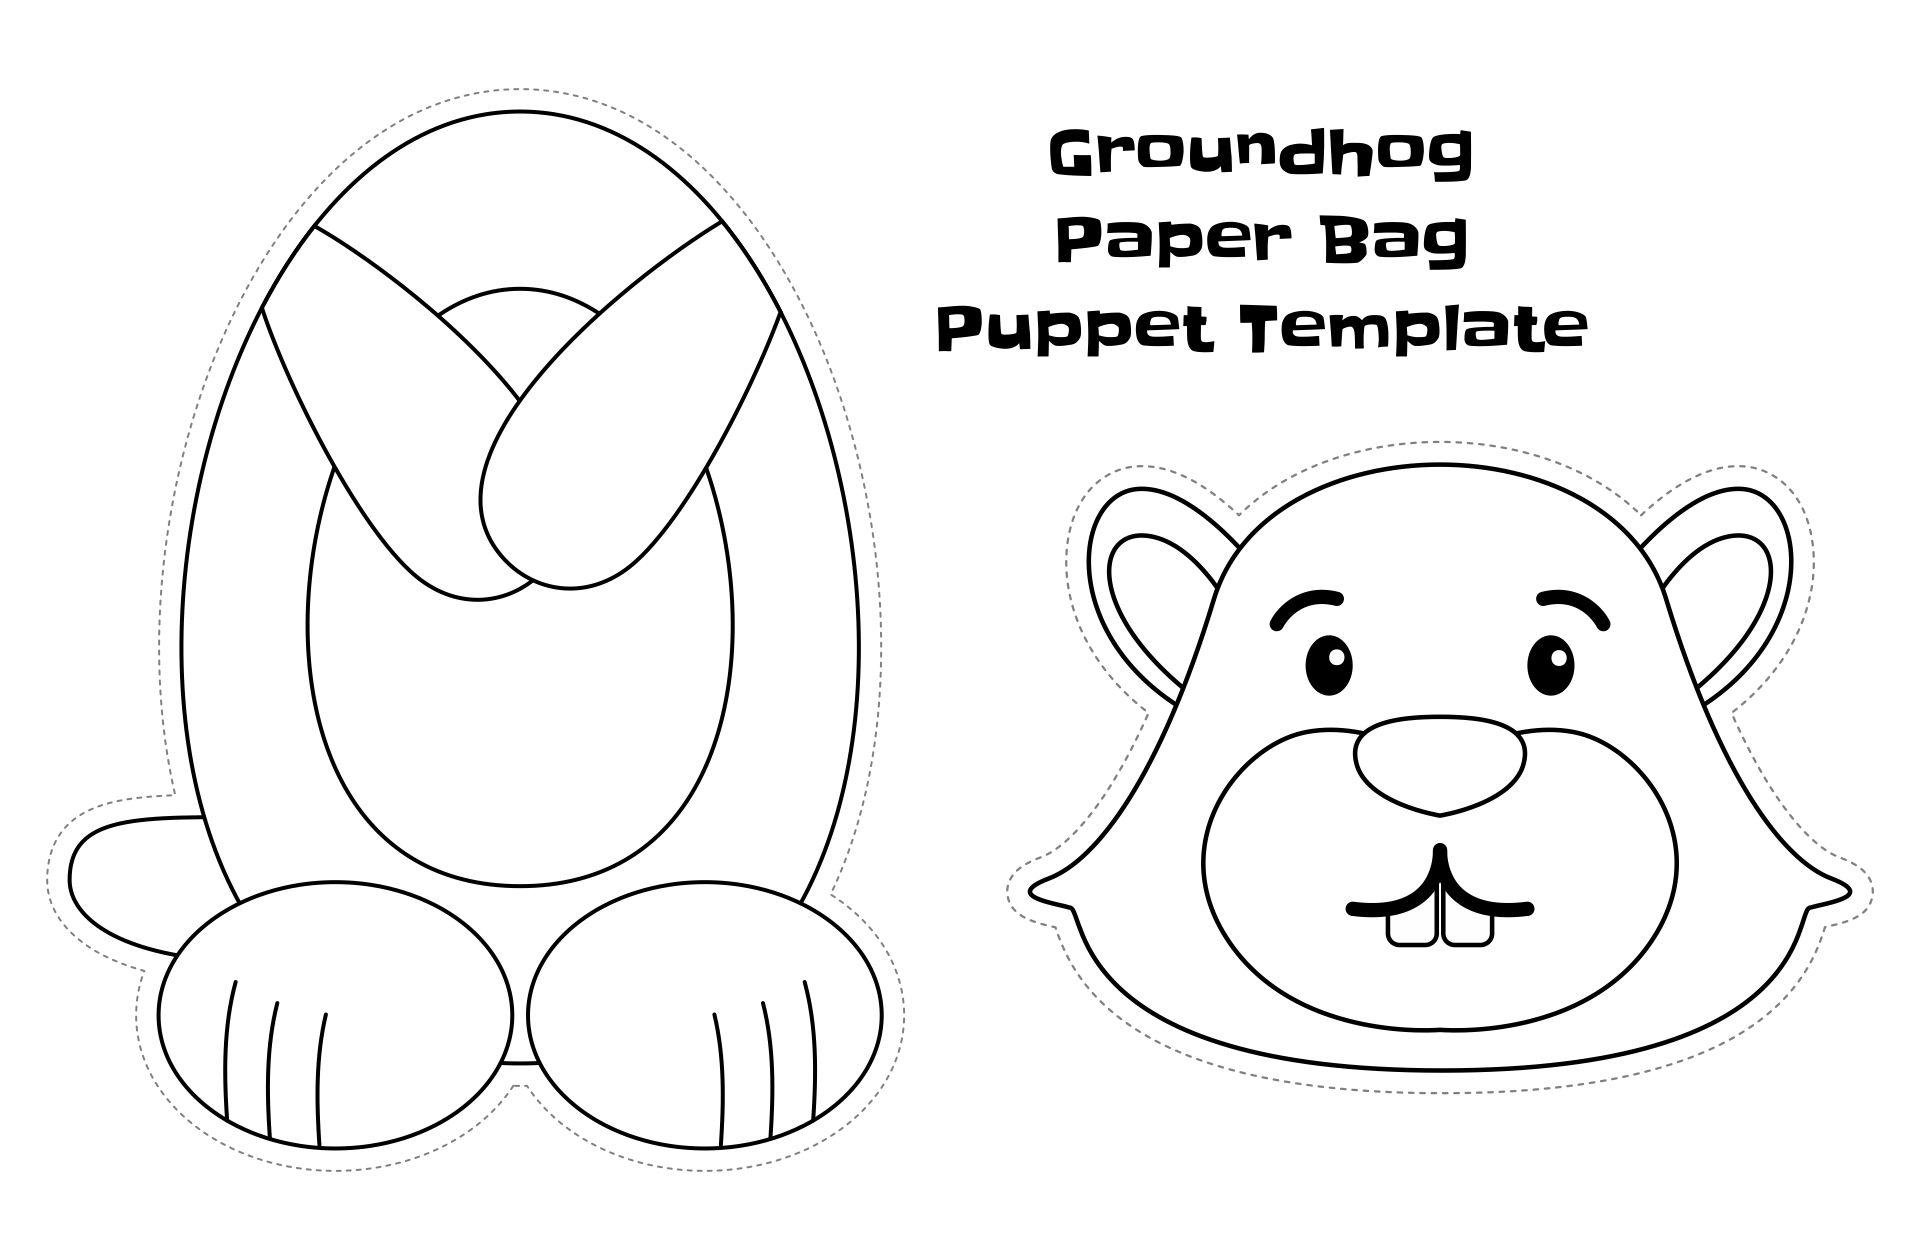 Groundhog Paper Bag Puppet Template